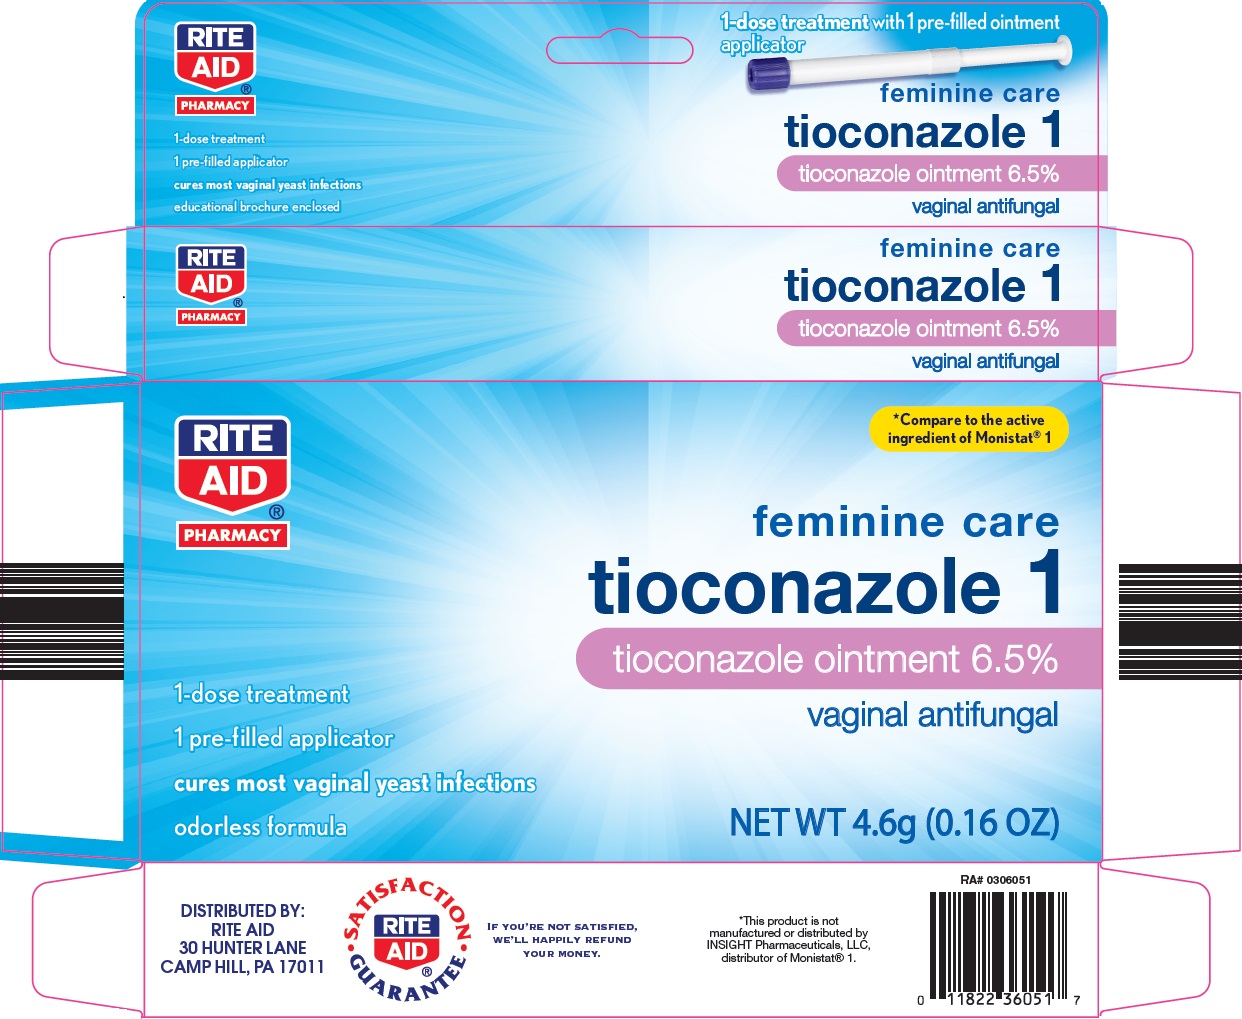 Rite Aid Pharmacy Tioconazole 1 image 1